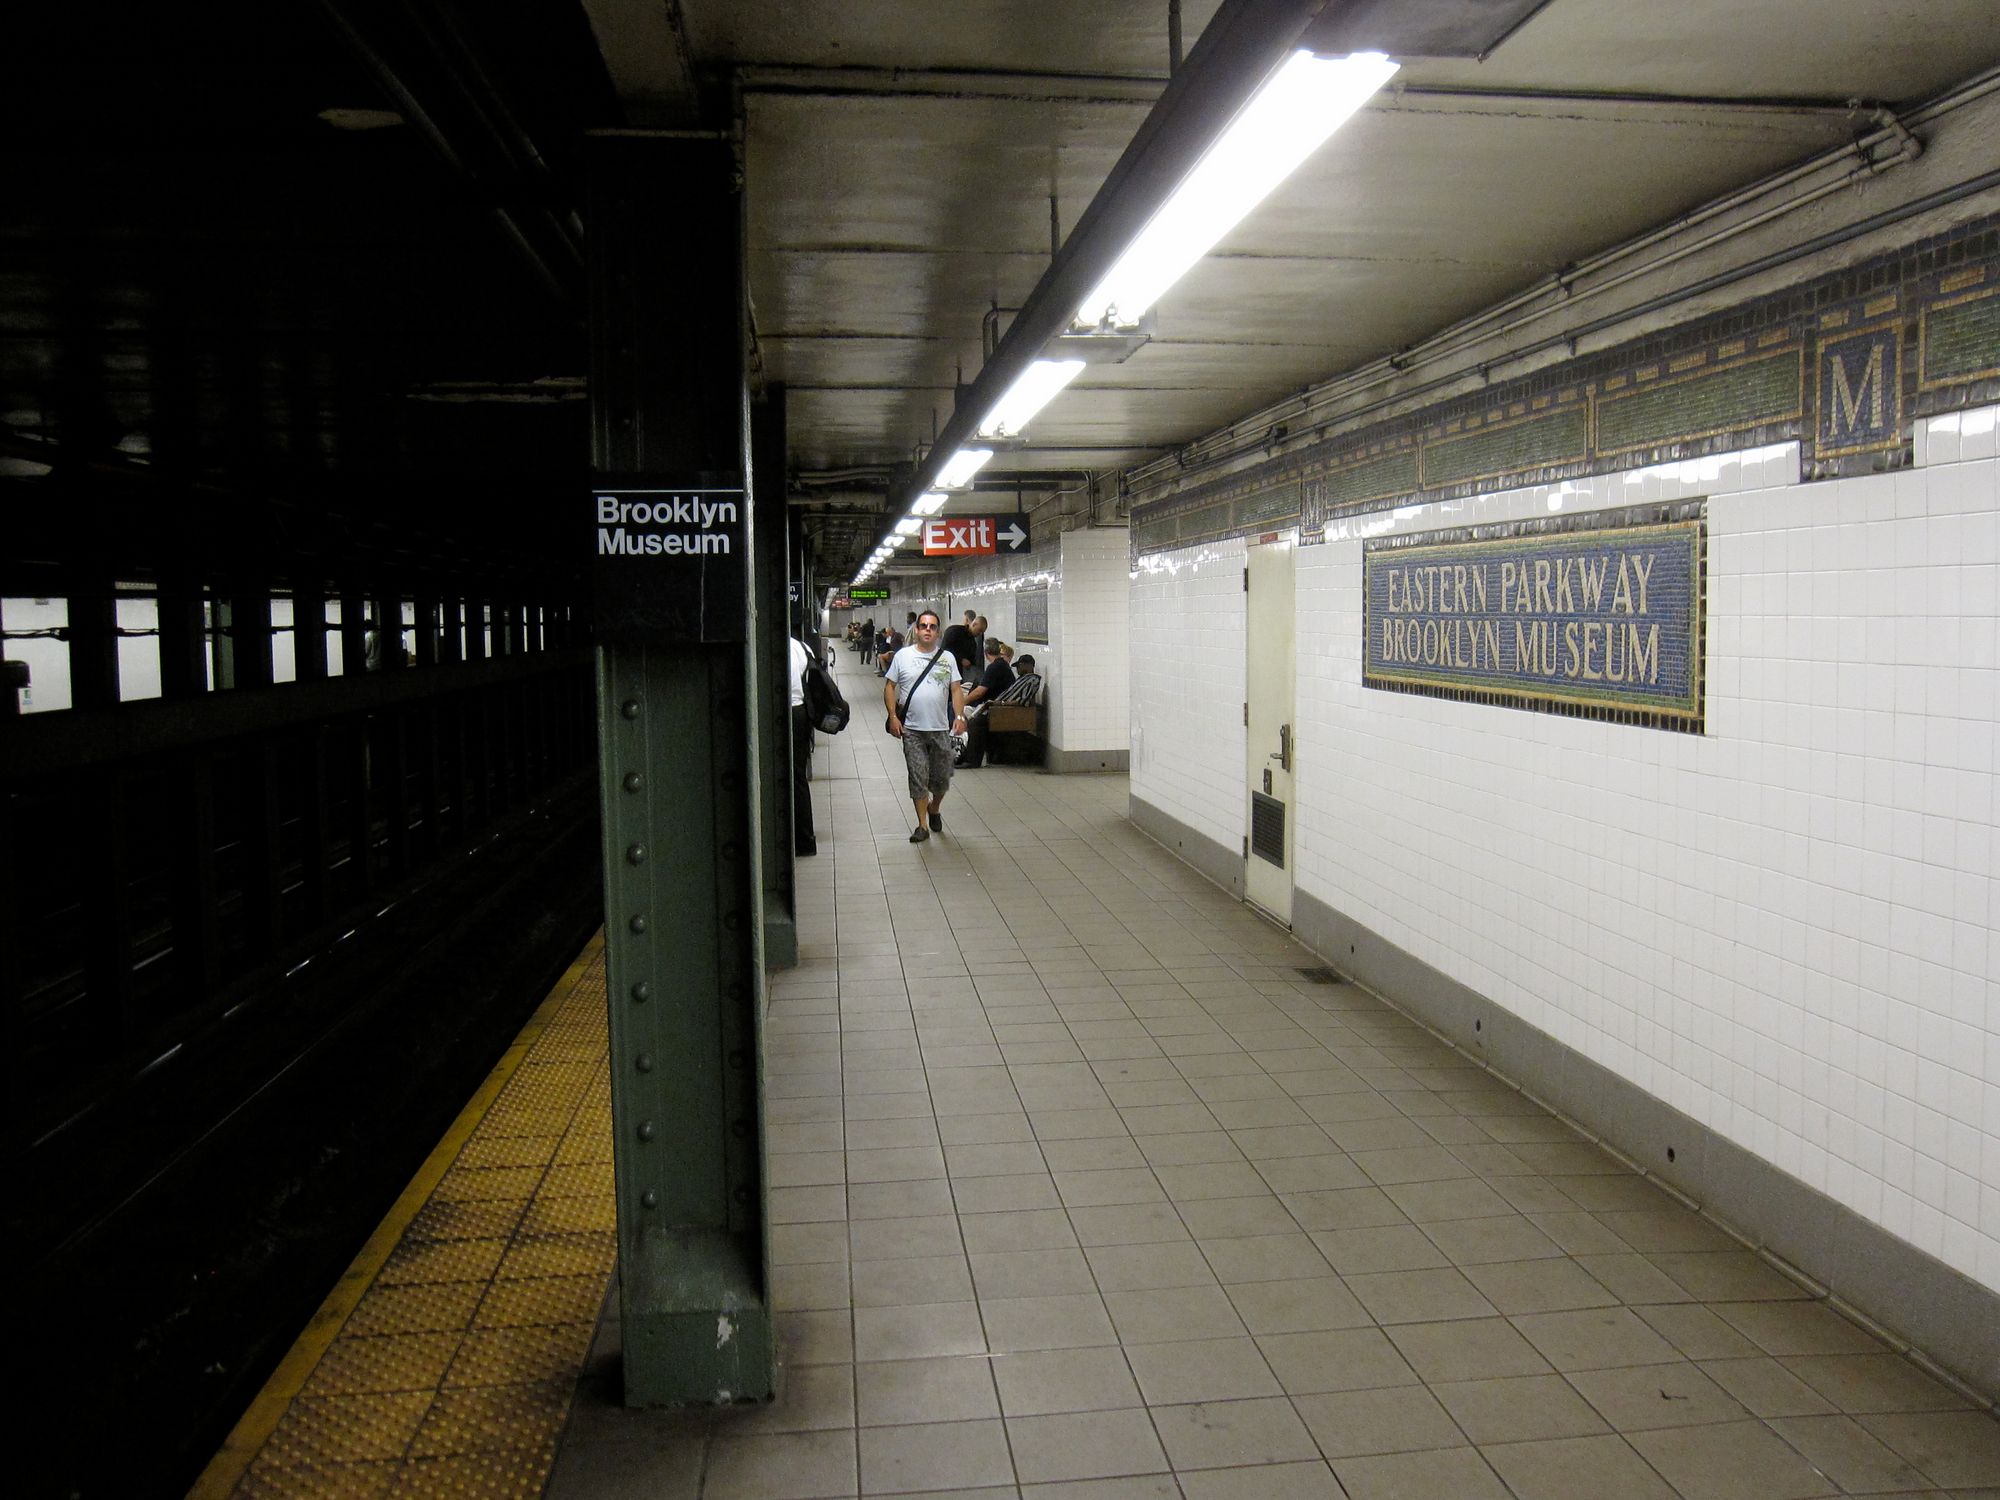 Eastern Parkway – Brooklyn Museum Train Station To Get Elevators